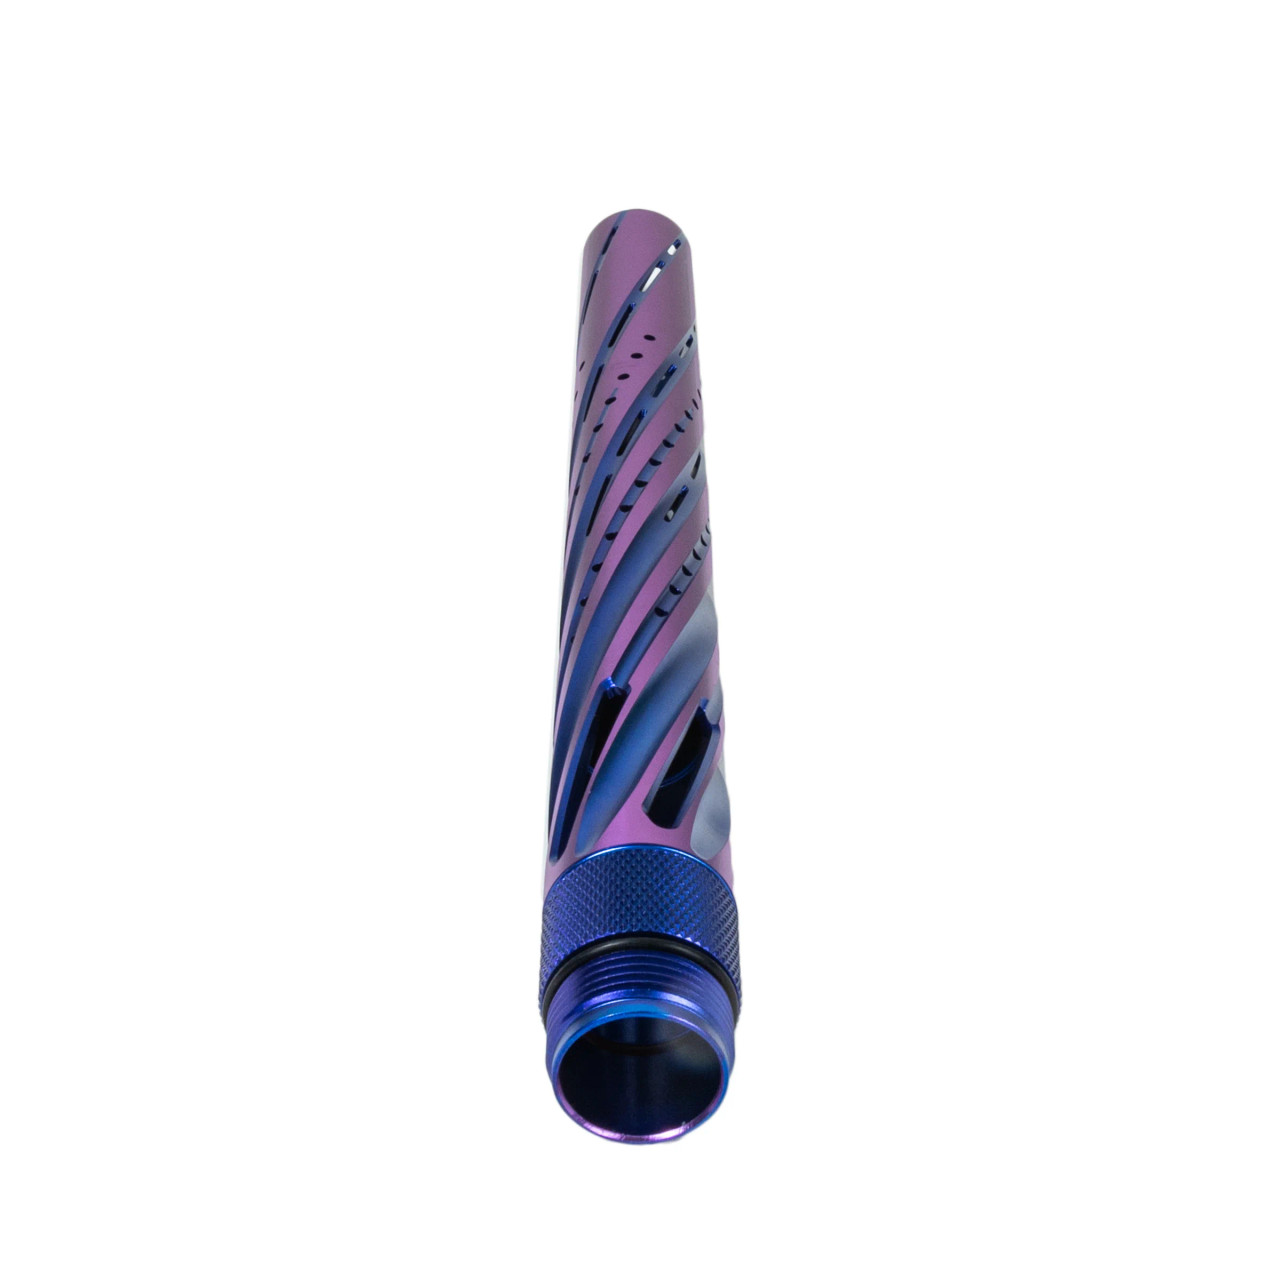 HK - LAZR S63 Tip - Orbit - Dust Blue/Purple